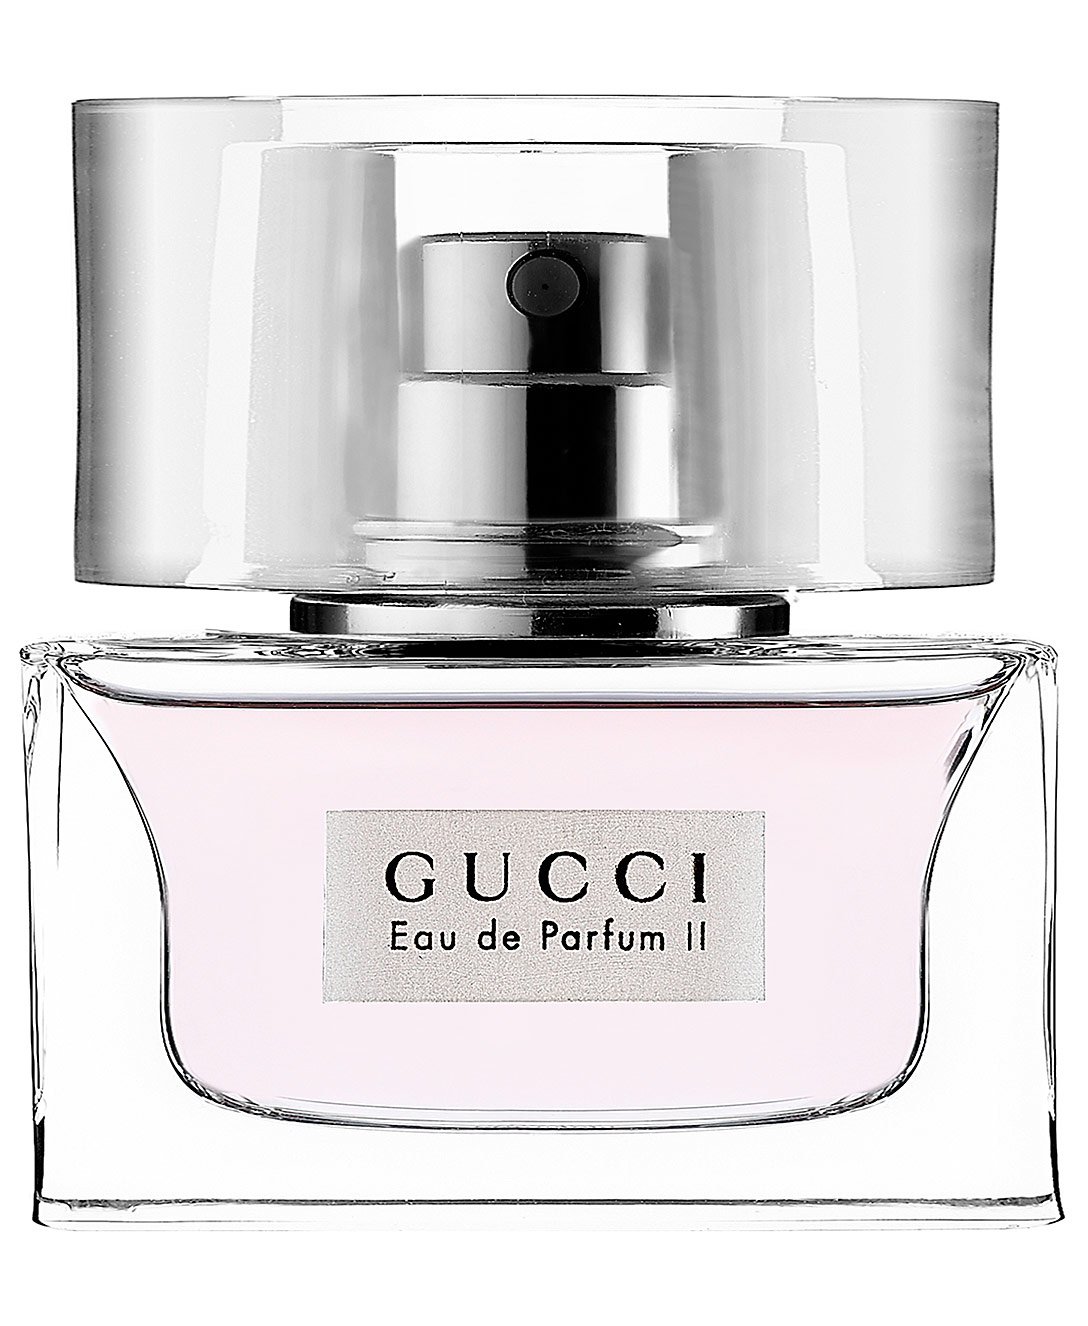 Gucci Eau de Parfum II Gucci perfume - a fragrance for women 2004